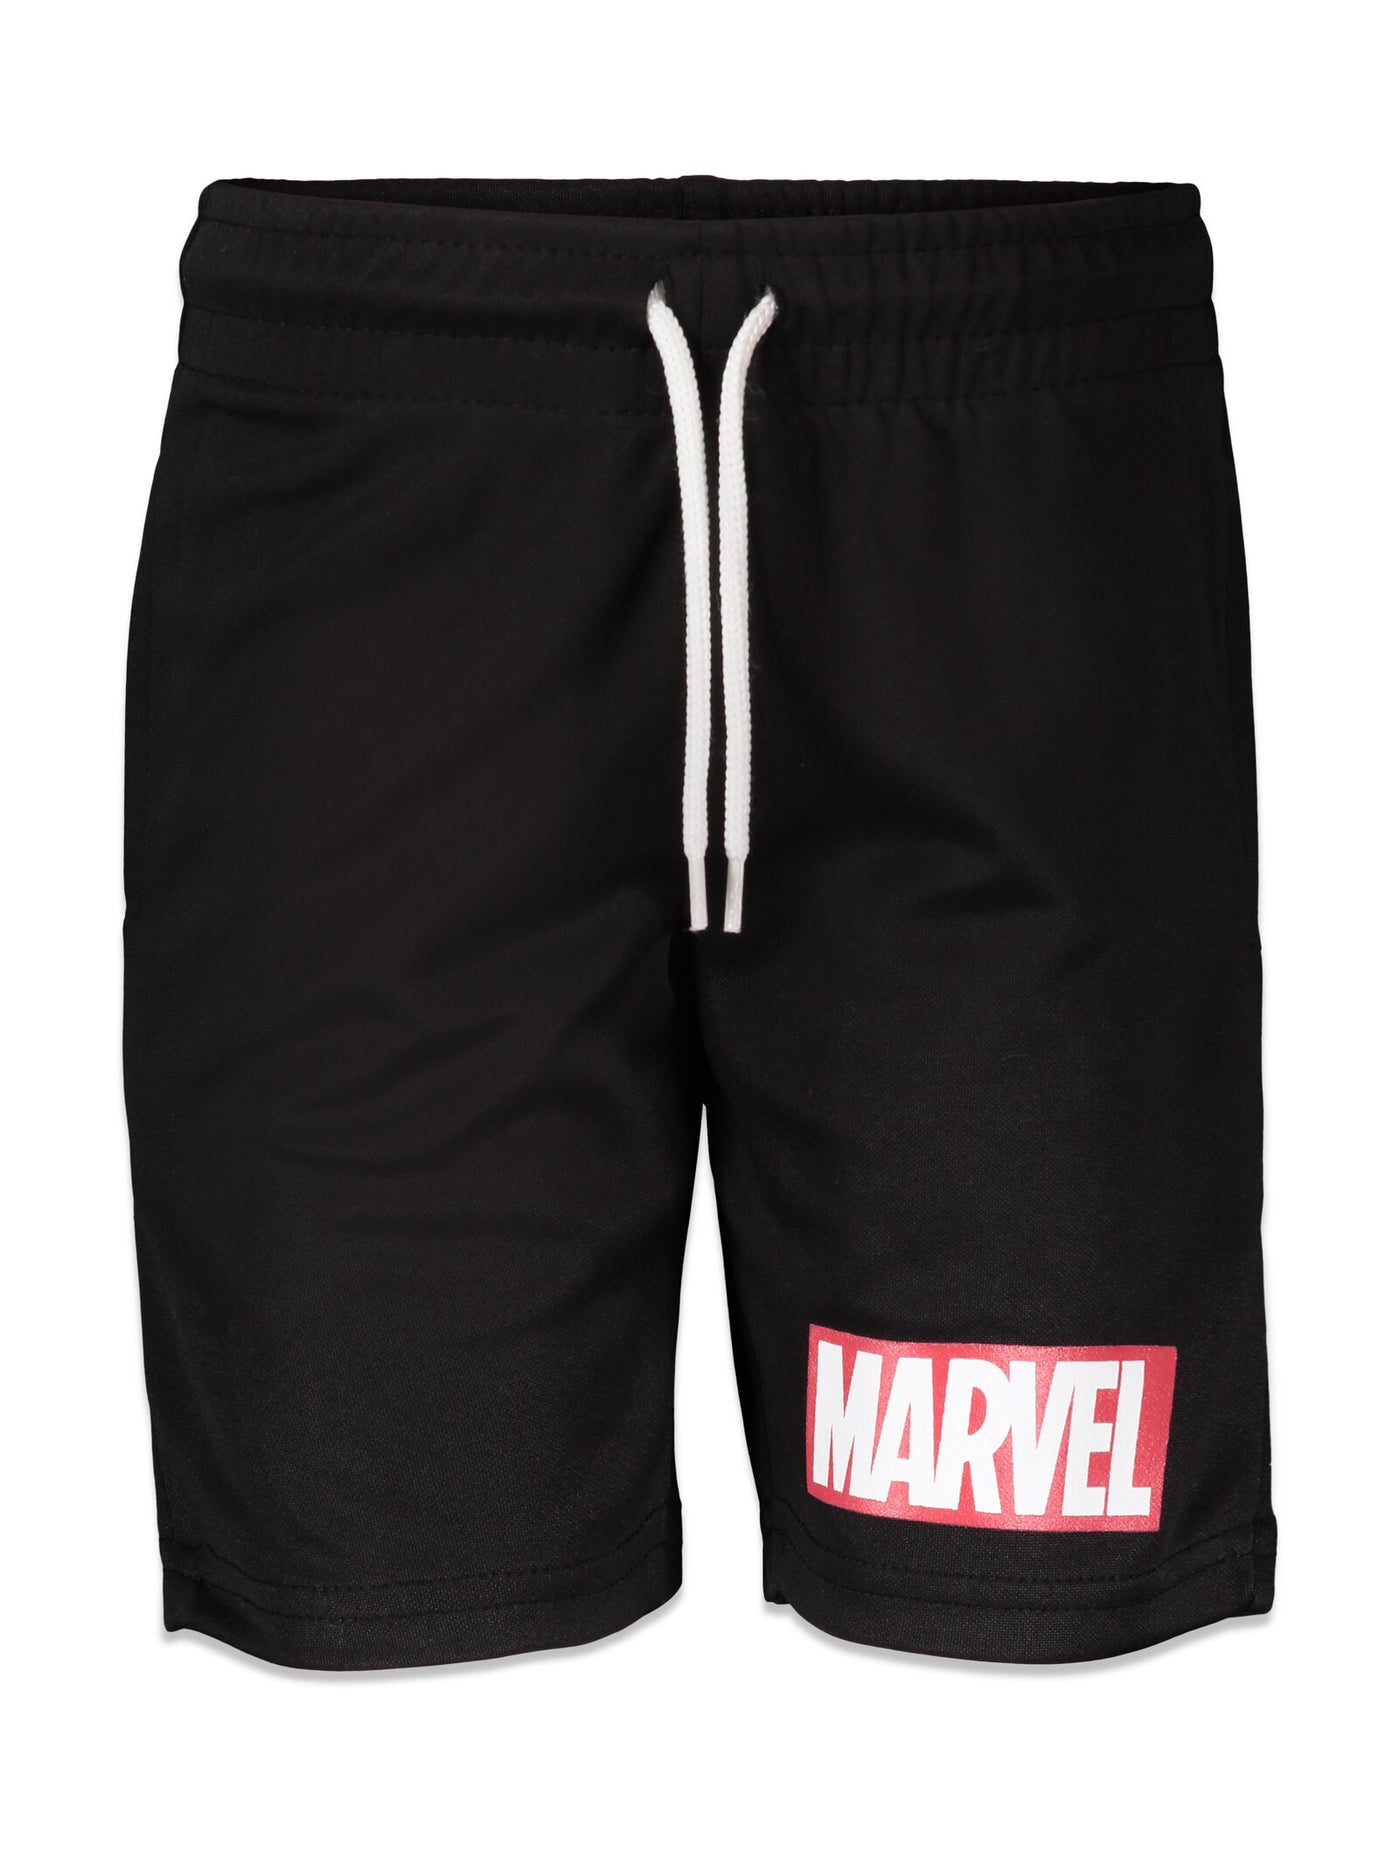 Marvel 2 Pack Shorts